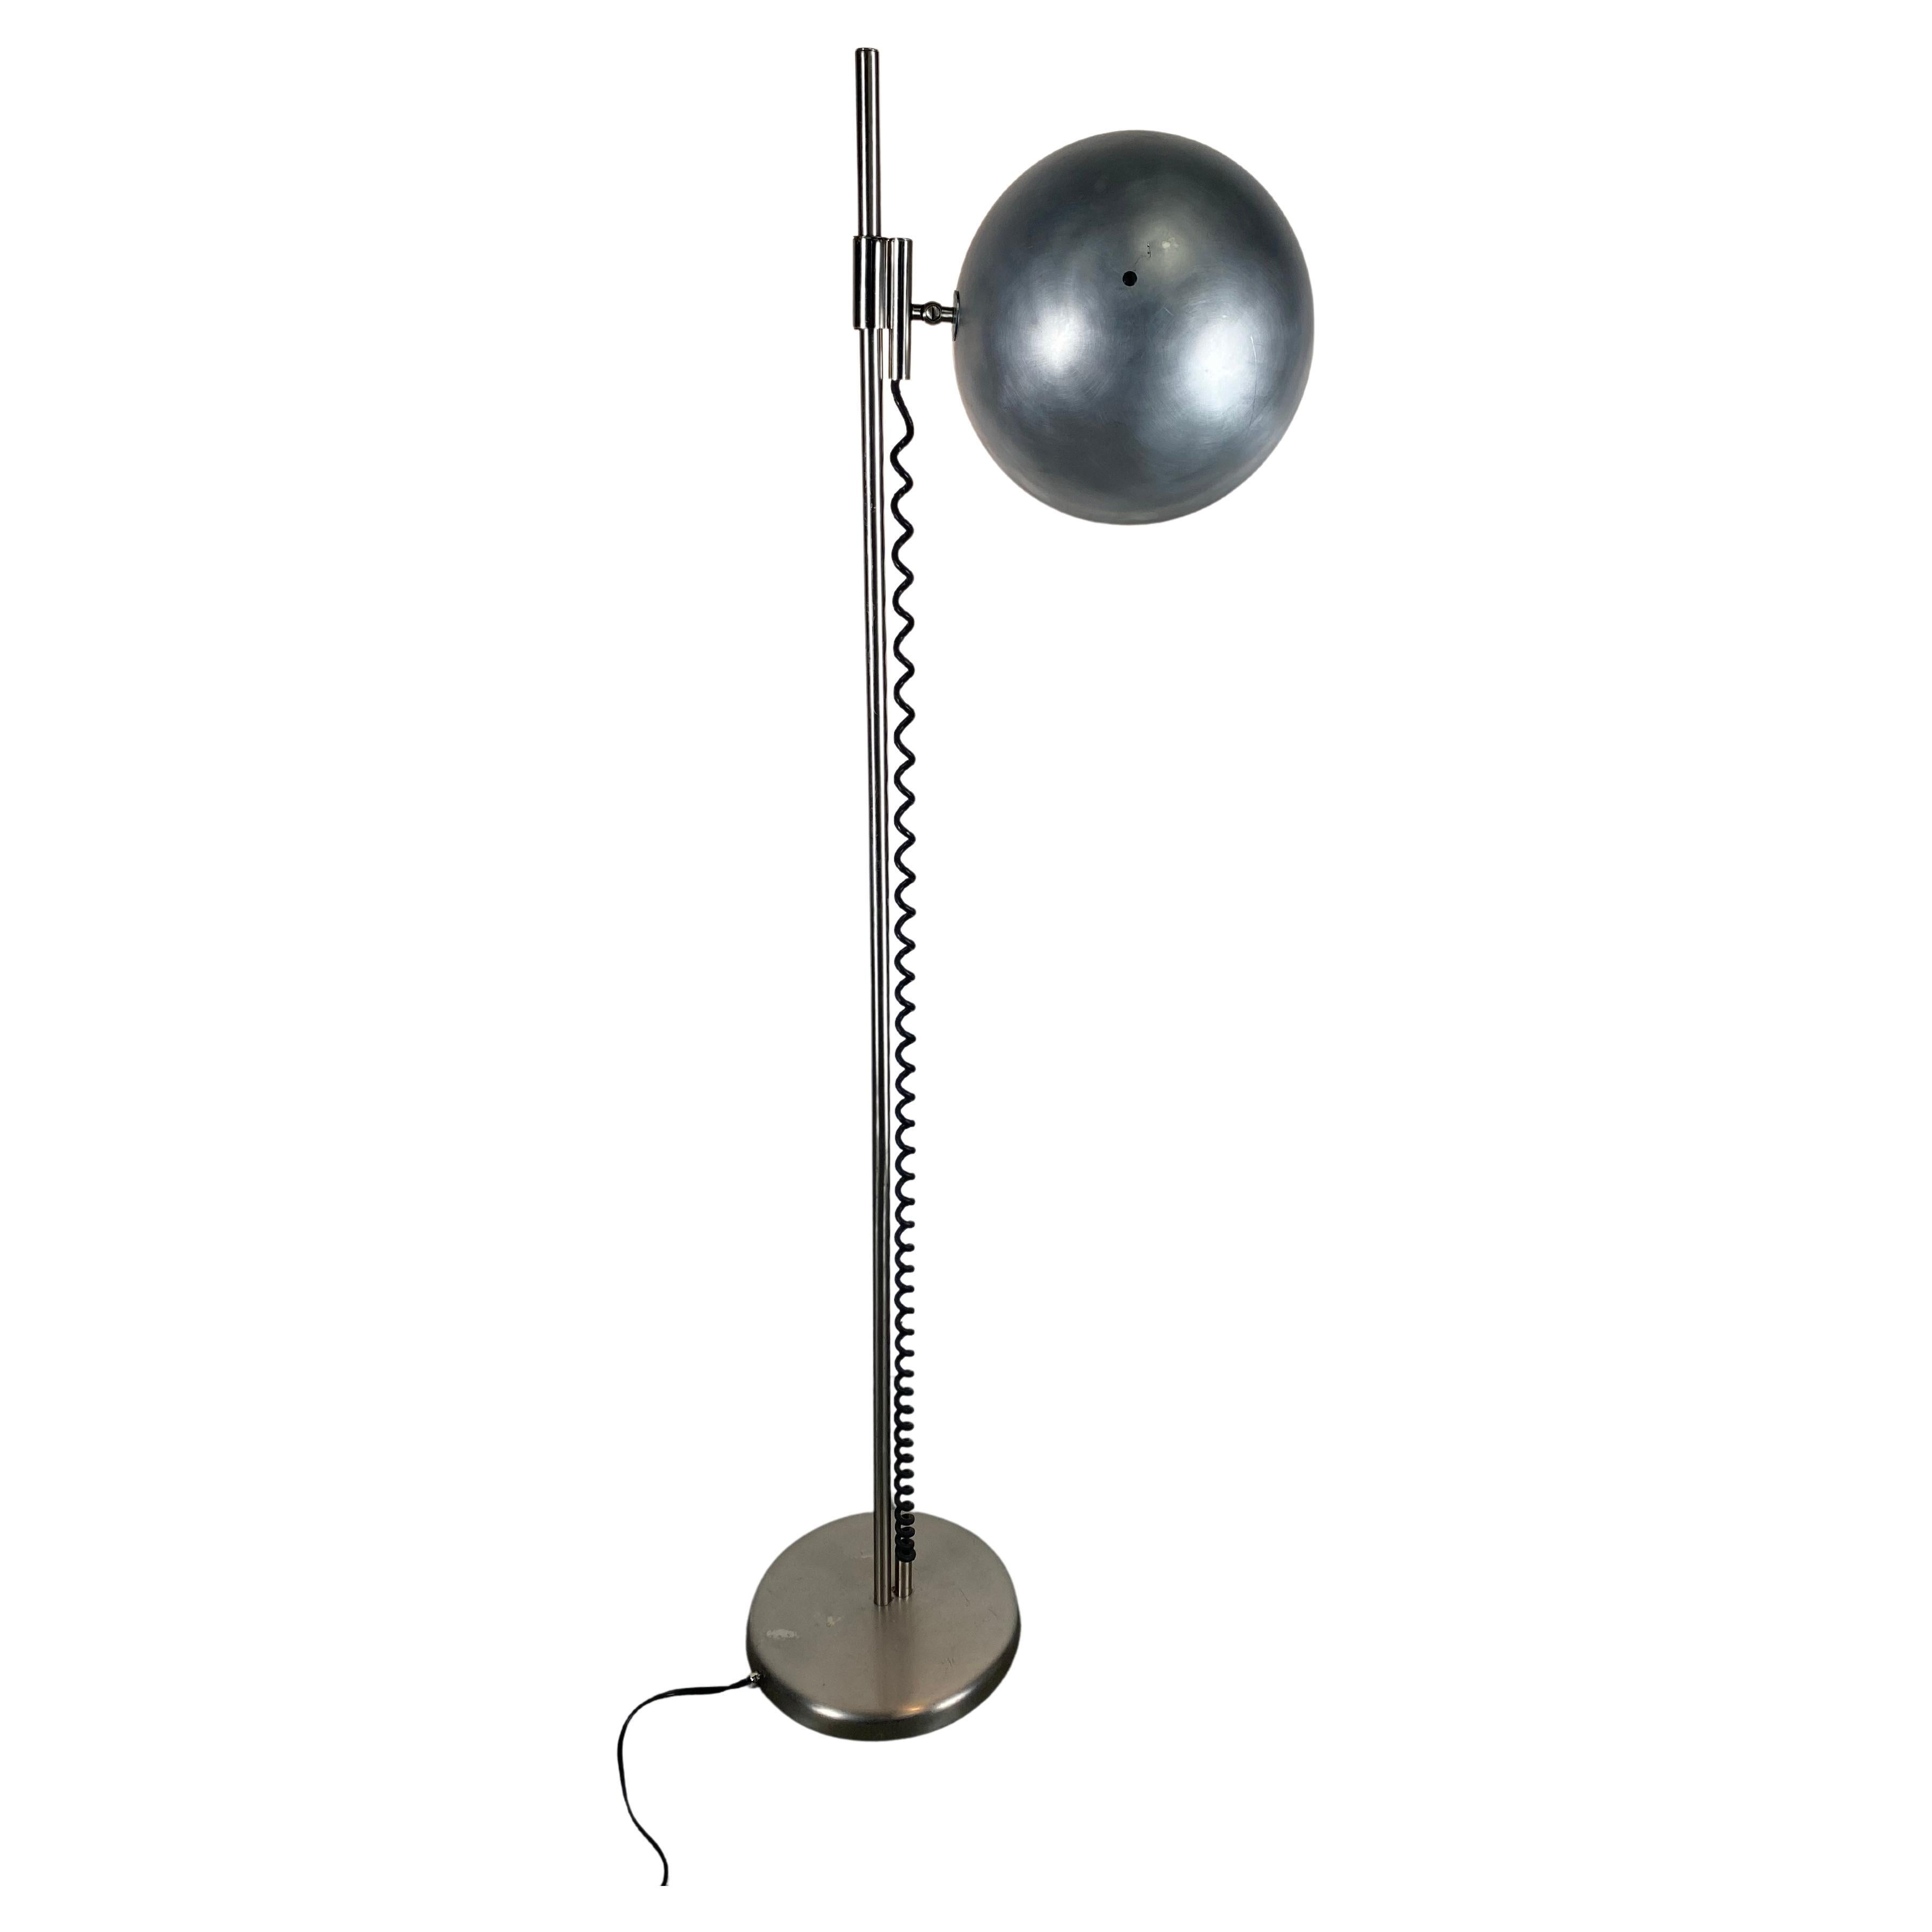 Unusual 1970s Bauhaus Inspired Adjustable Floor Lamp, Spun Aluminum Shade For Sale